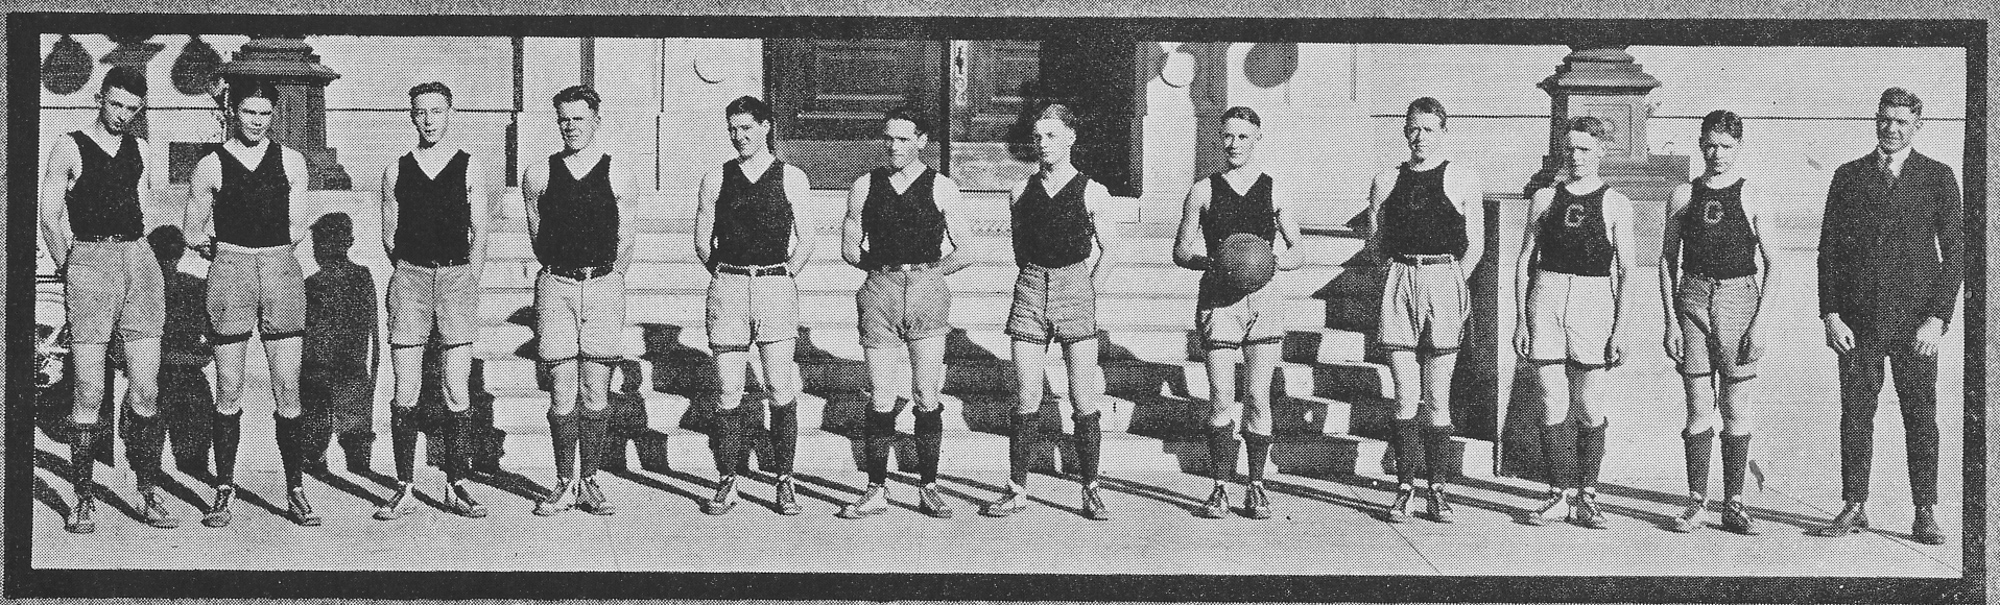 Dauth Family Archive - 1921 - Spud Yearbook -  June Dauth Spud Basketball Photo In Uniform